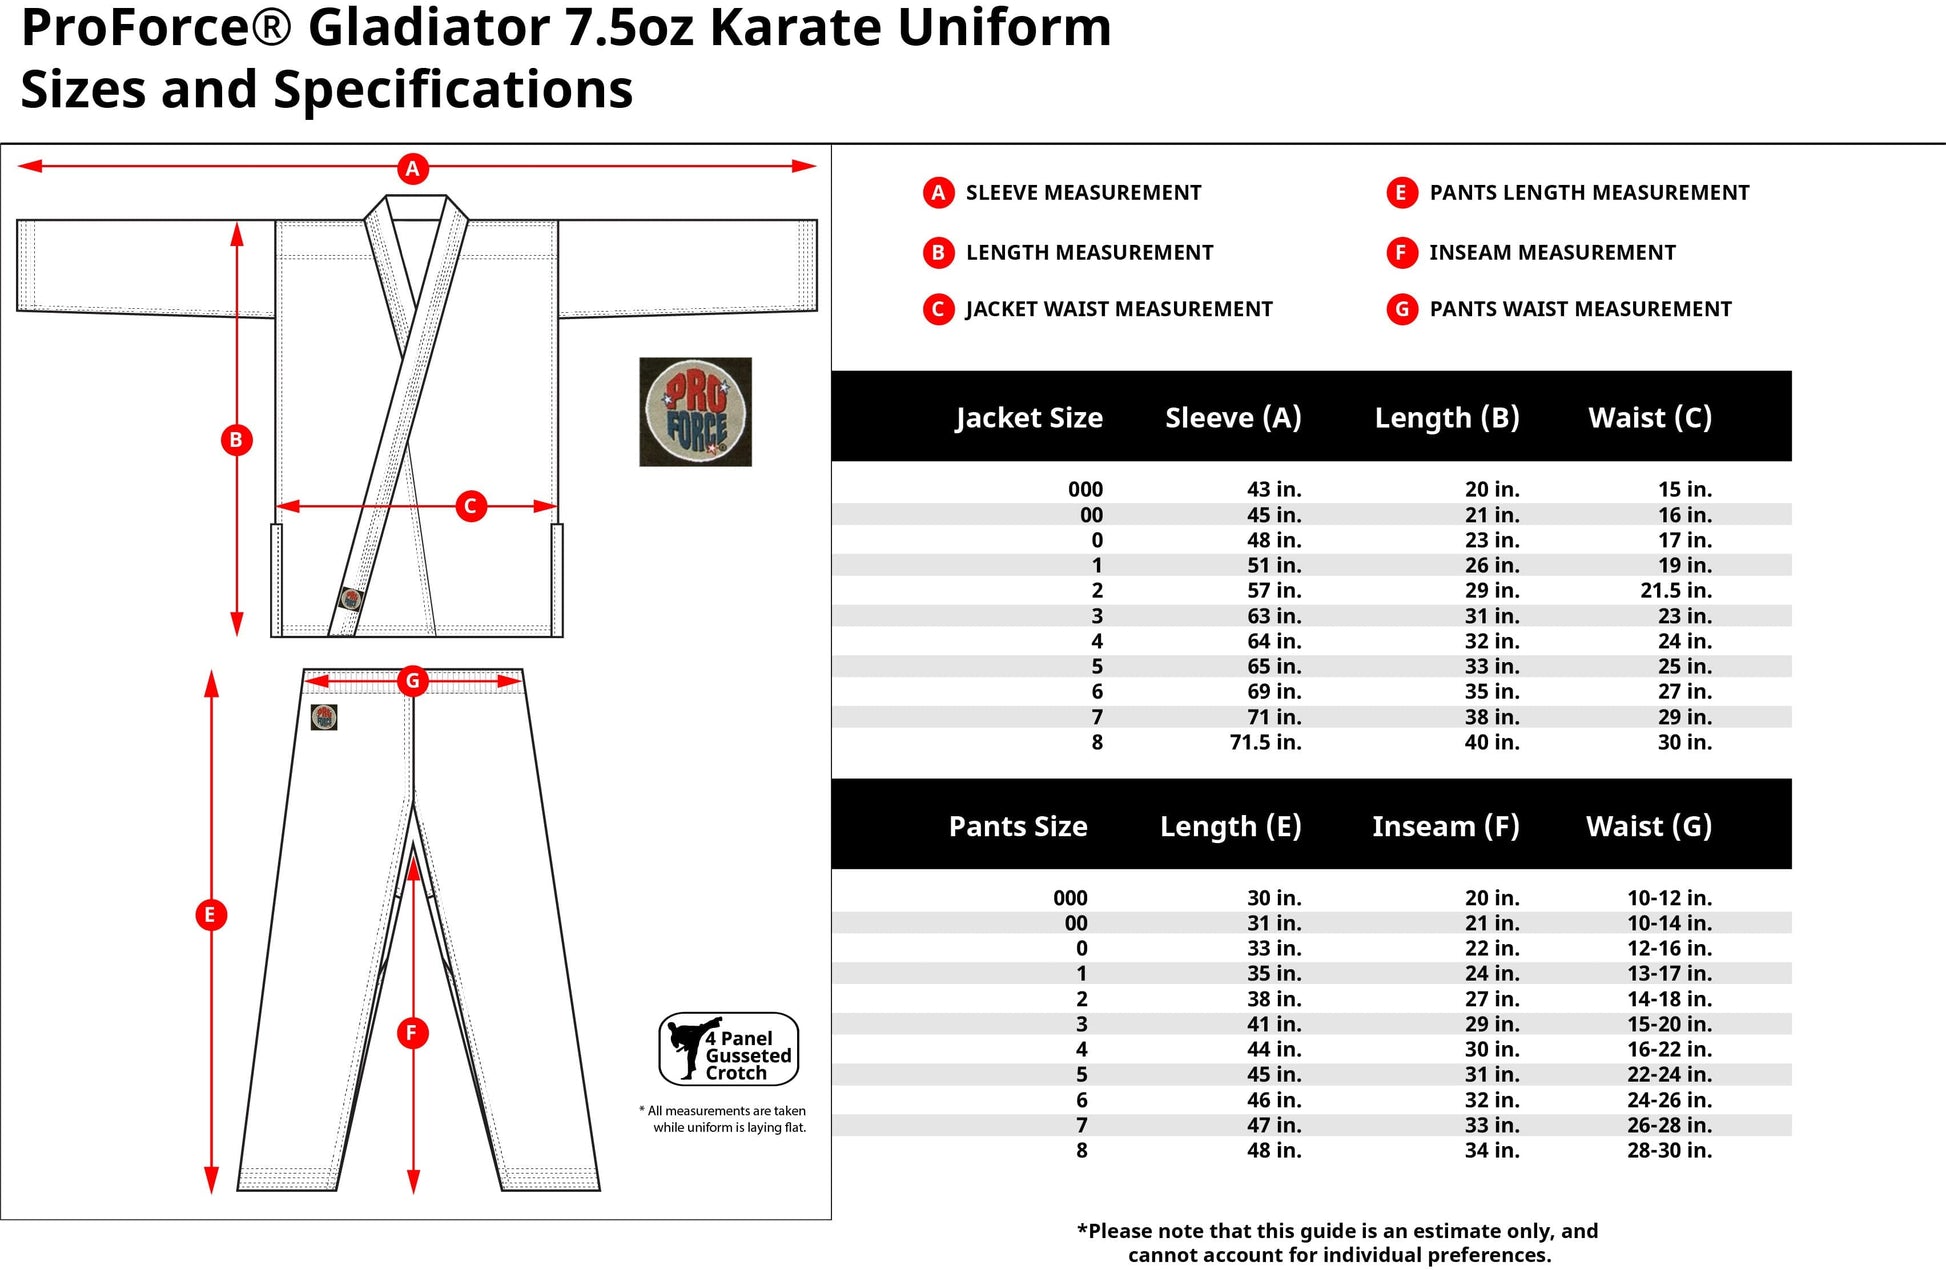 ProForce Karate Uniform ProForce Gladiator 7.5 oz Karate Uniform Elastic Drawstring Pants - Blend White